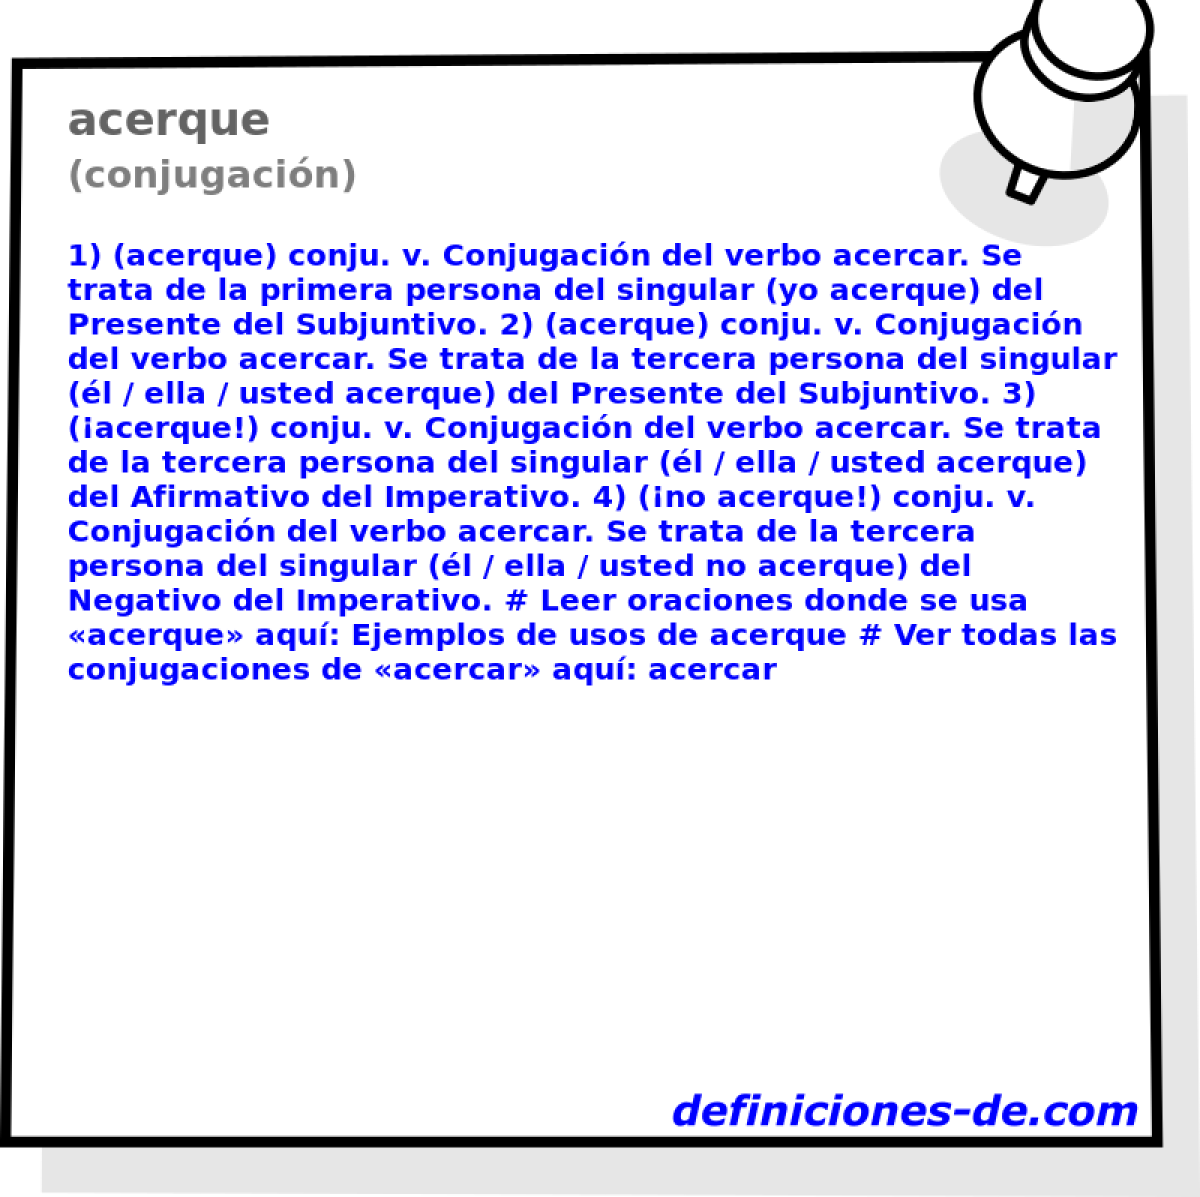 acerque (conjugacin)